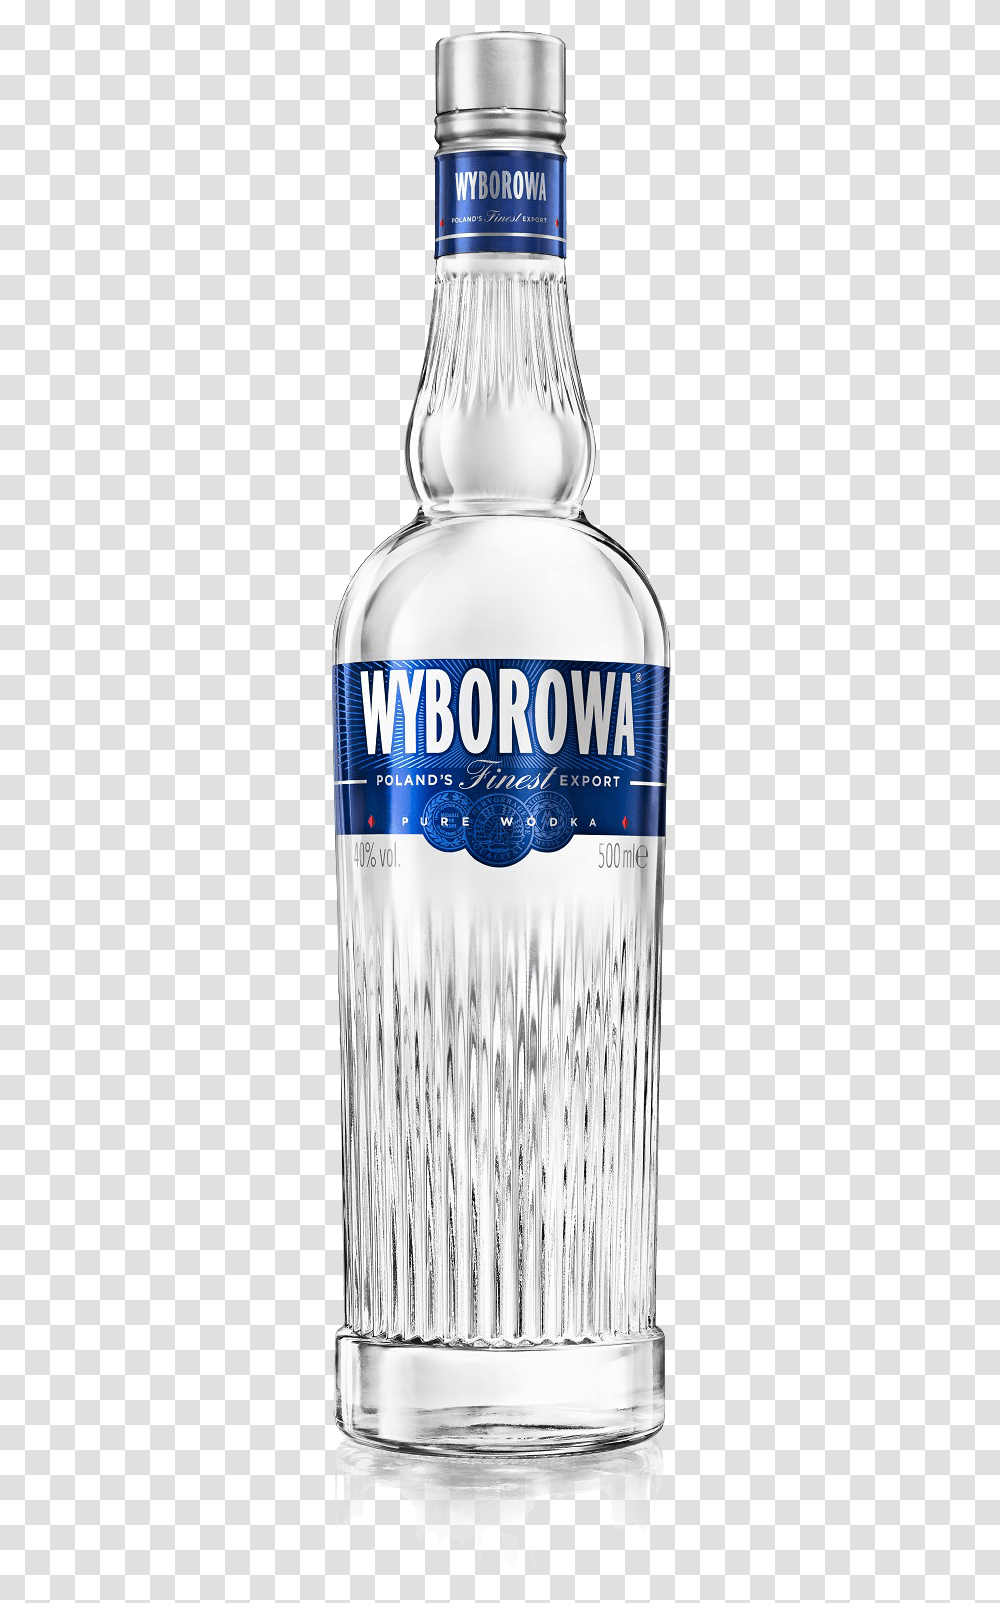 Vodka Wyborowa Bottle Open Vodka Bottle, Liquor, Alcohol, Beverage, Drink Transparent Png